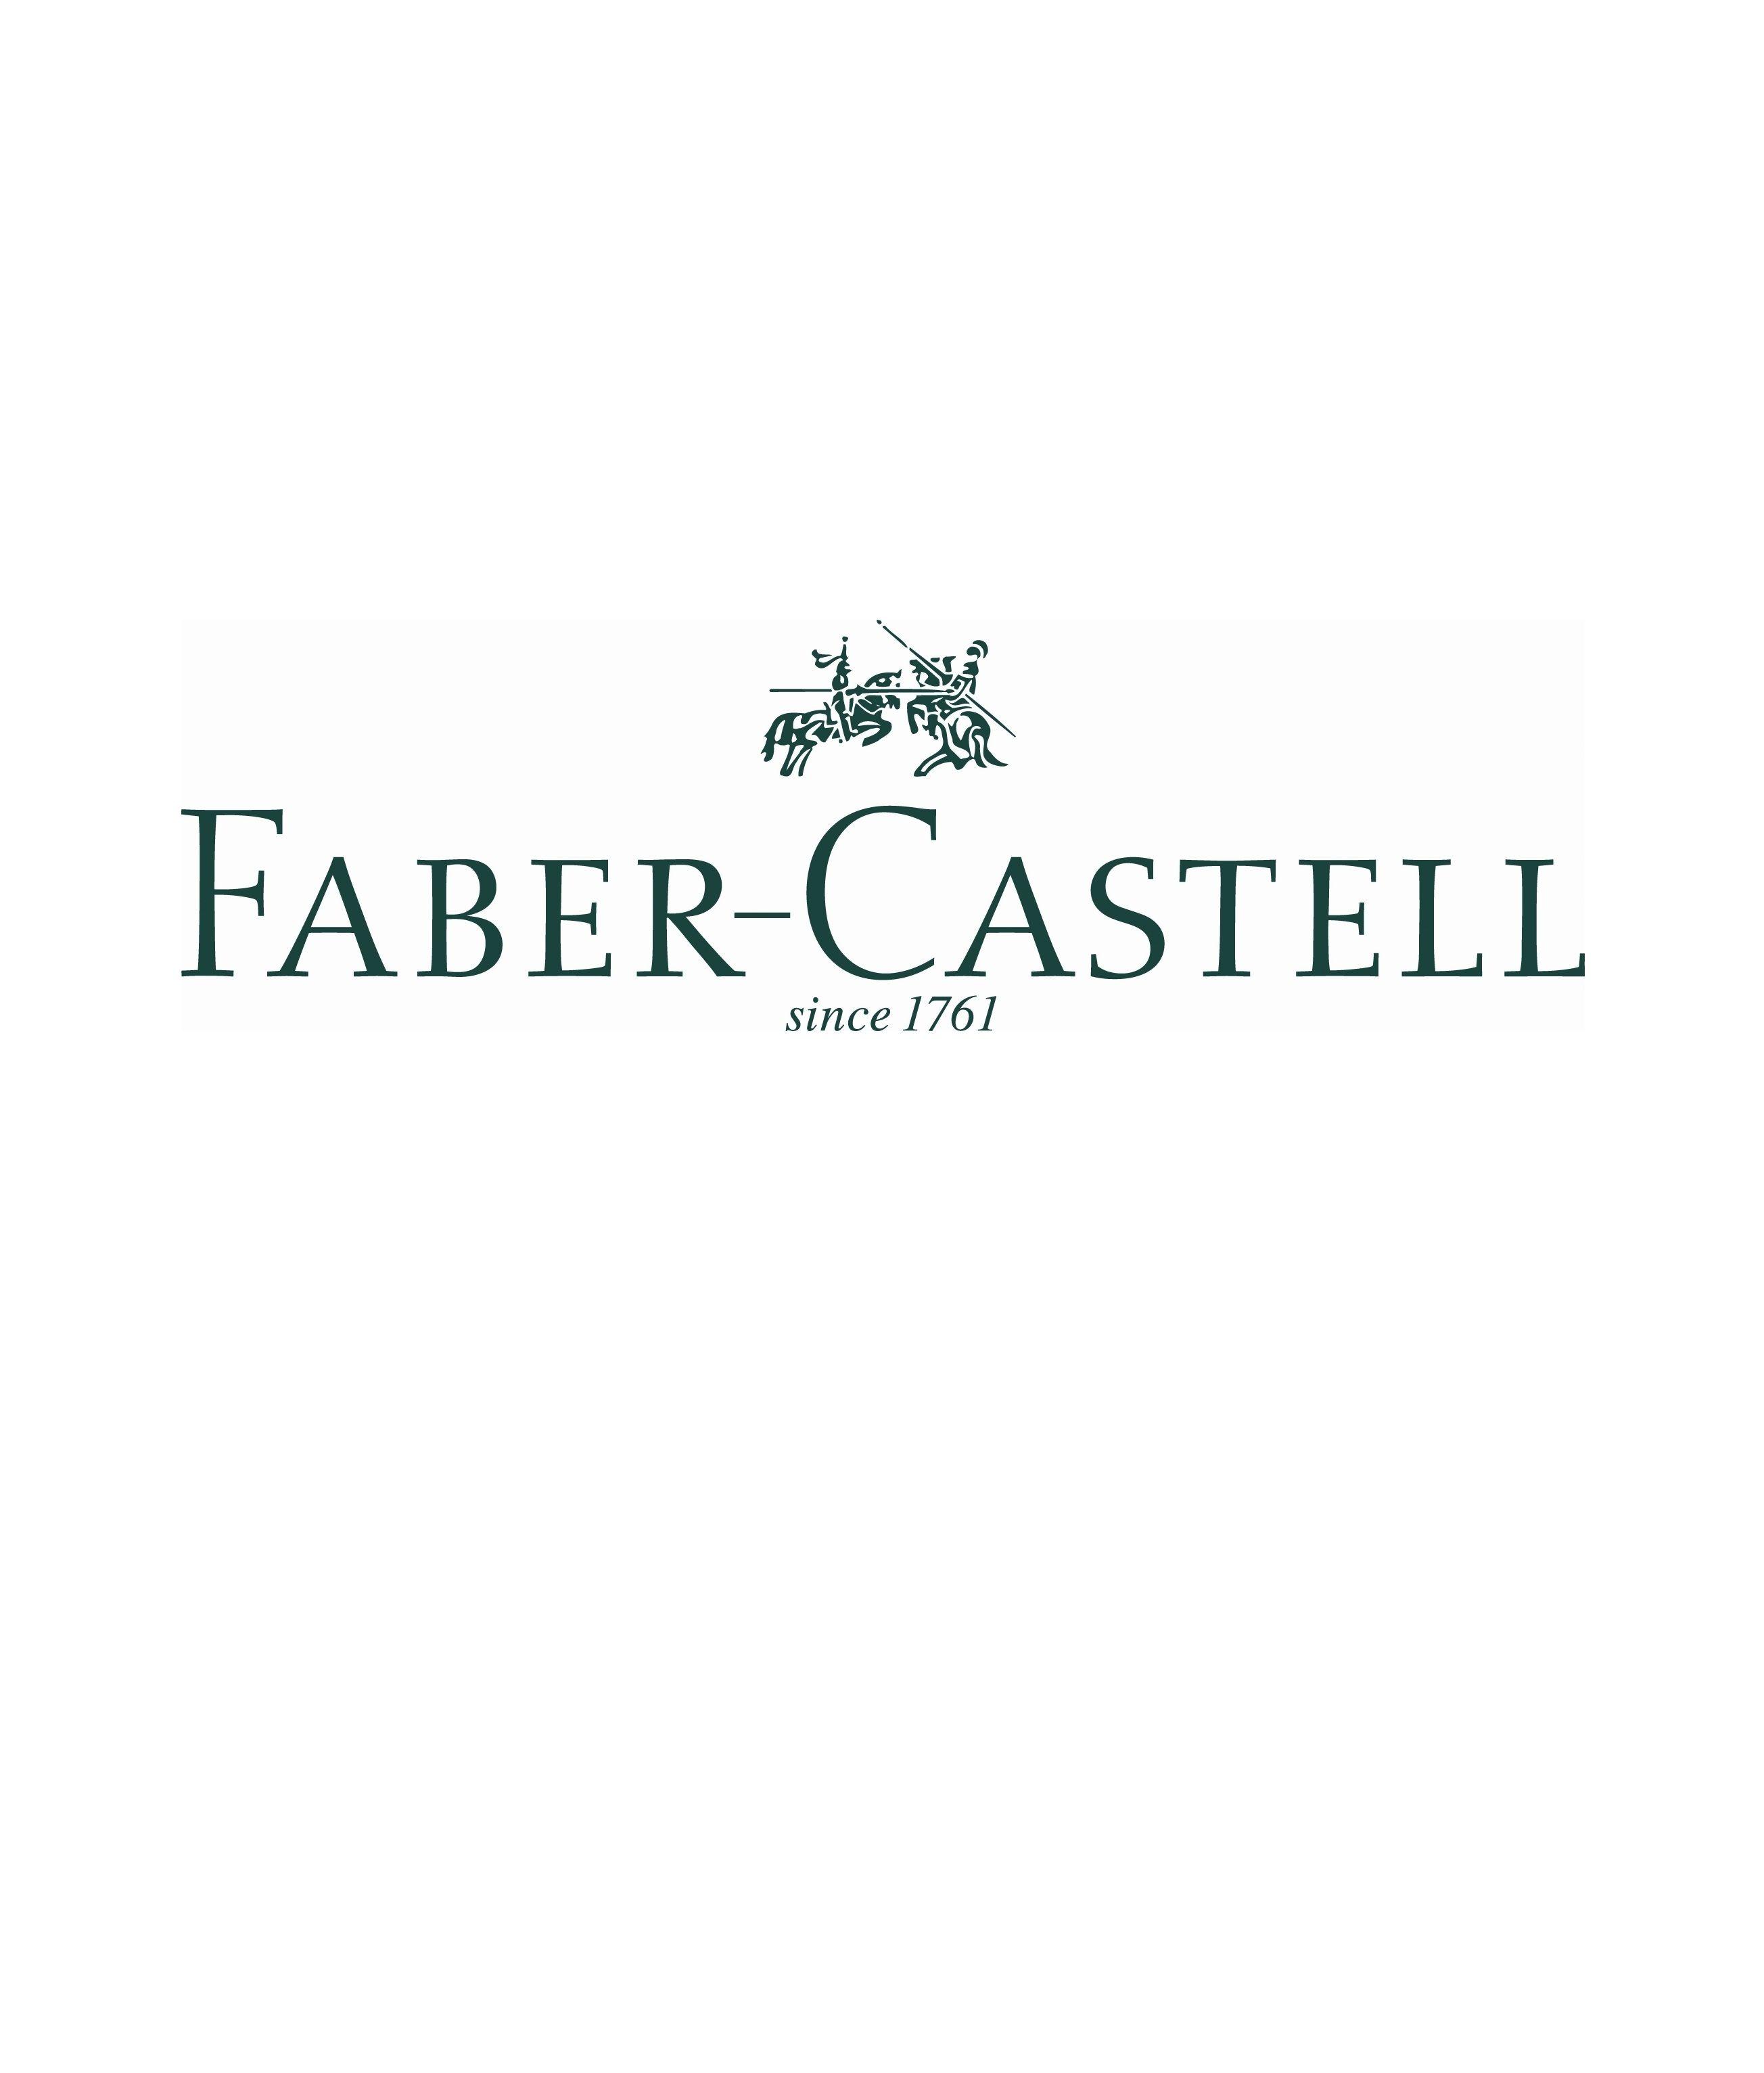 Faber-Castell Logo - FABER CASTELL' logo | Logo | Logos, Faber castell, Symbols